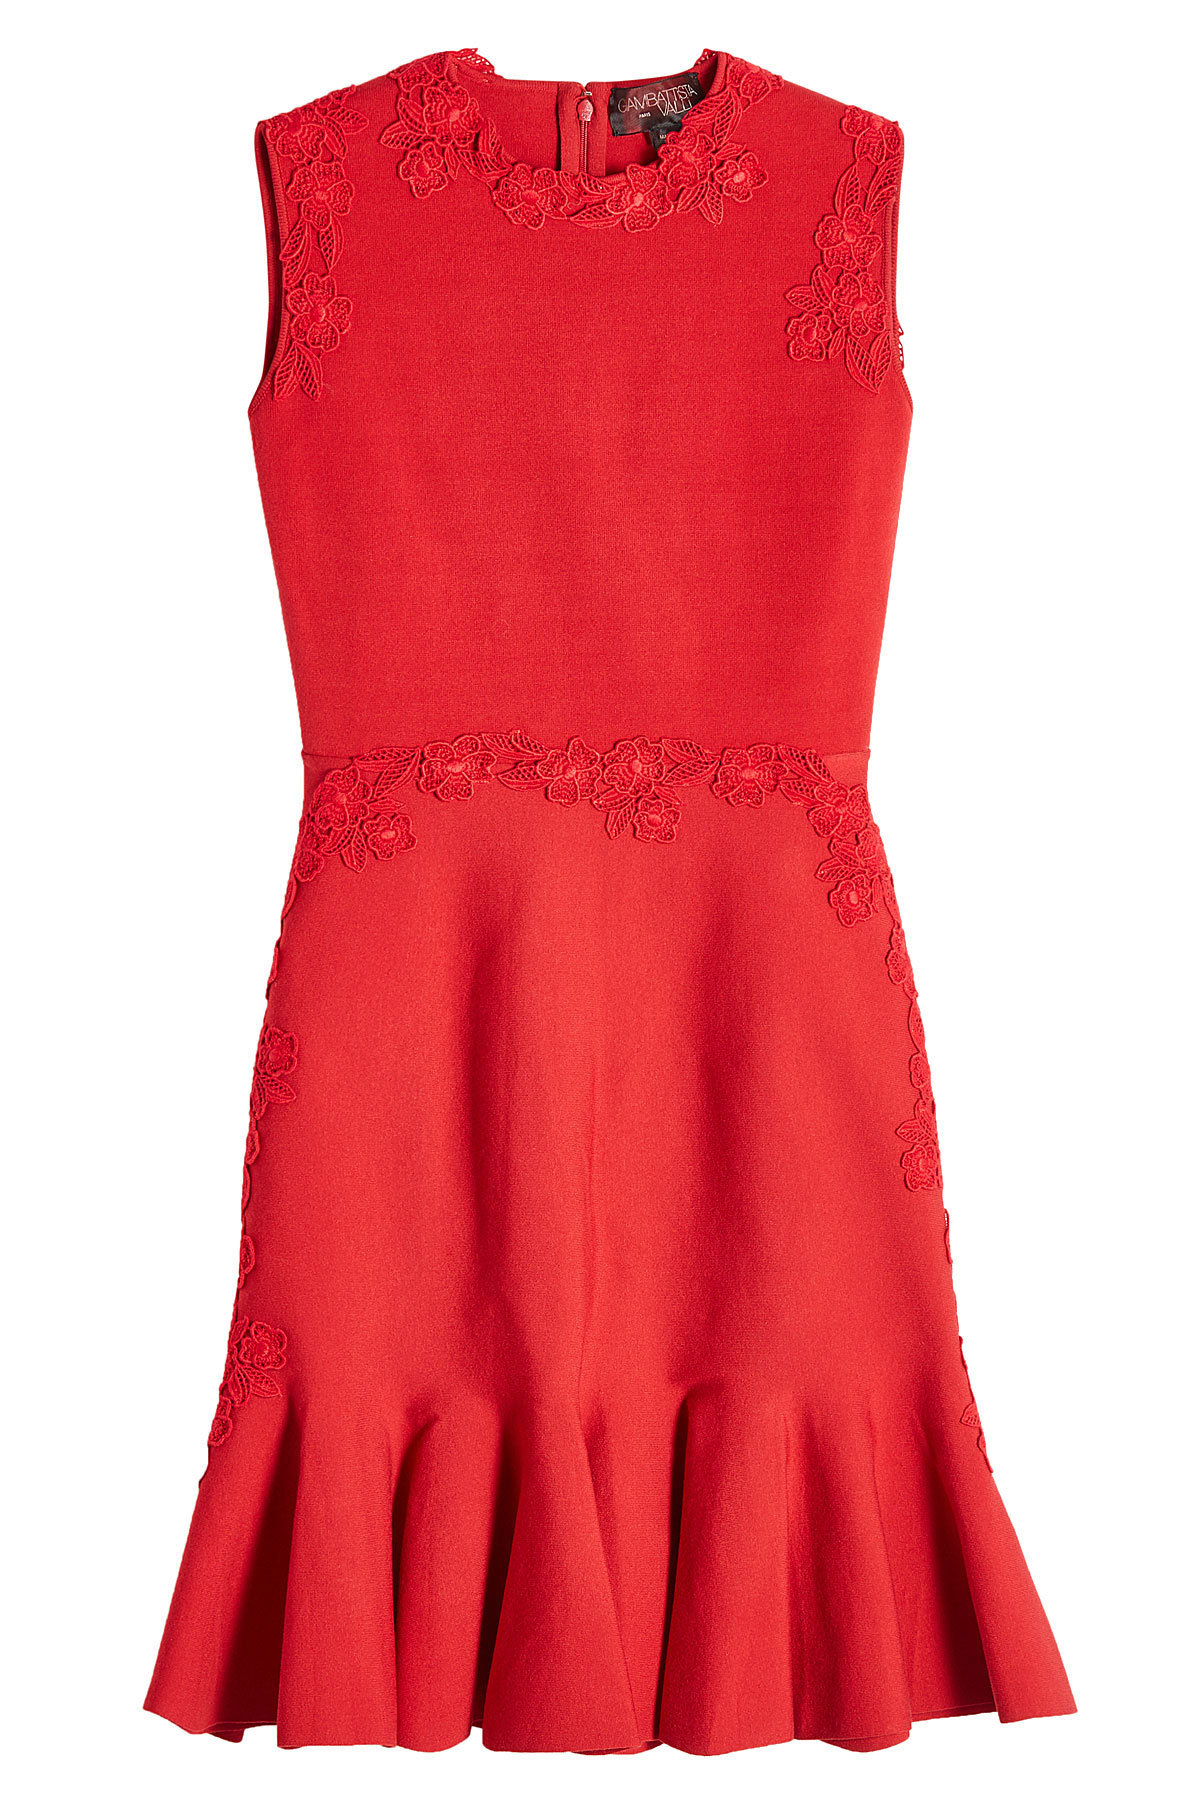 Giambattista Valli - Dress with Lace and Fluted Hem